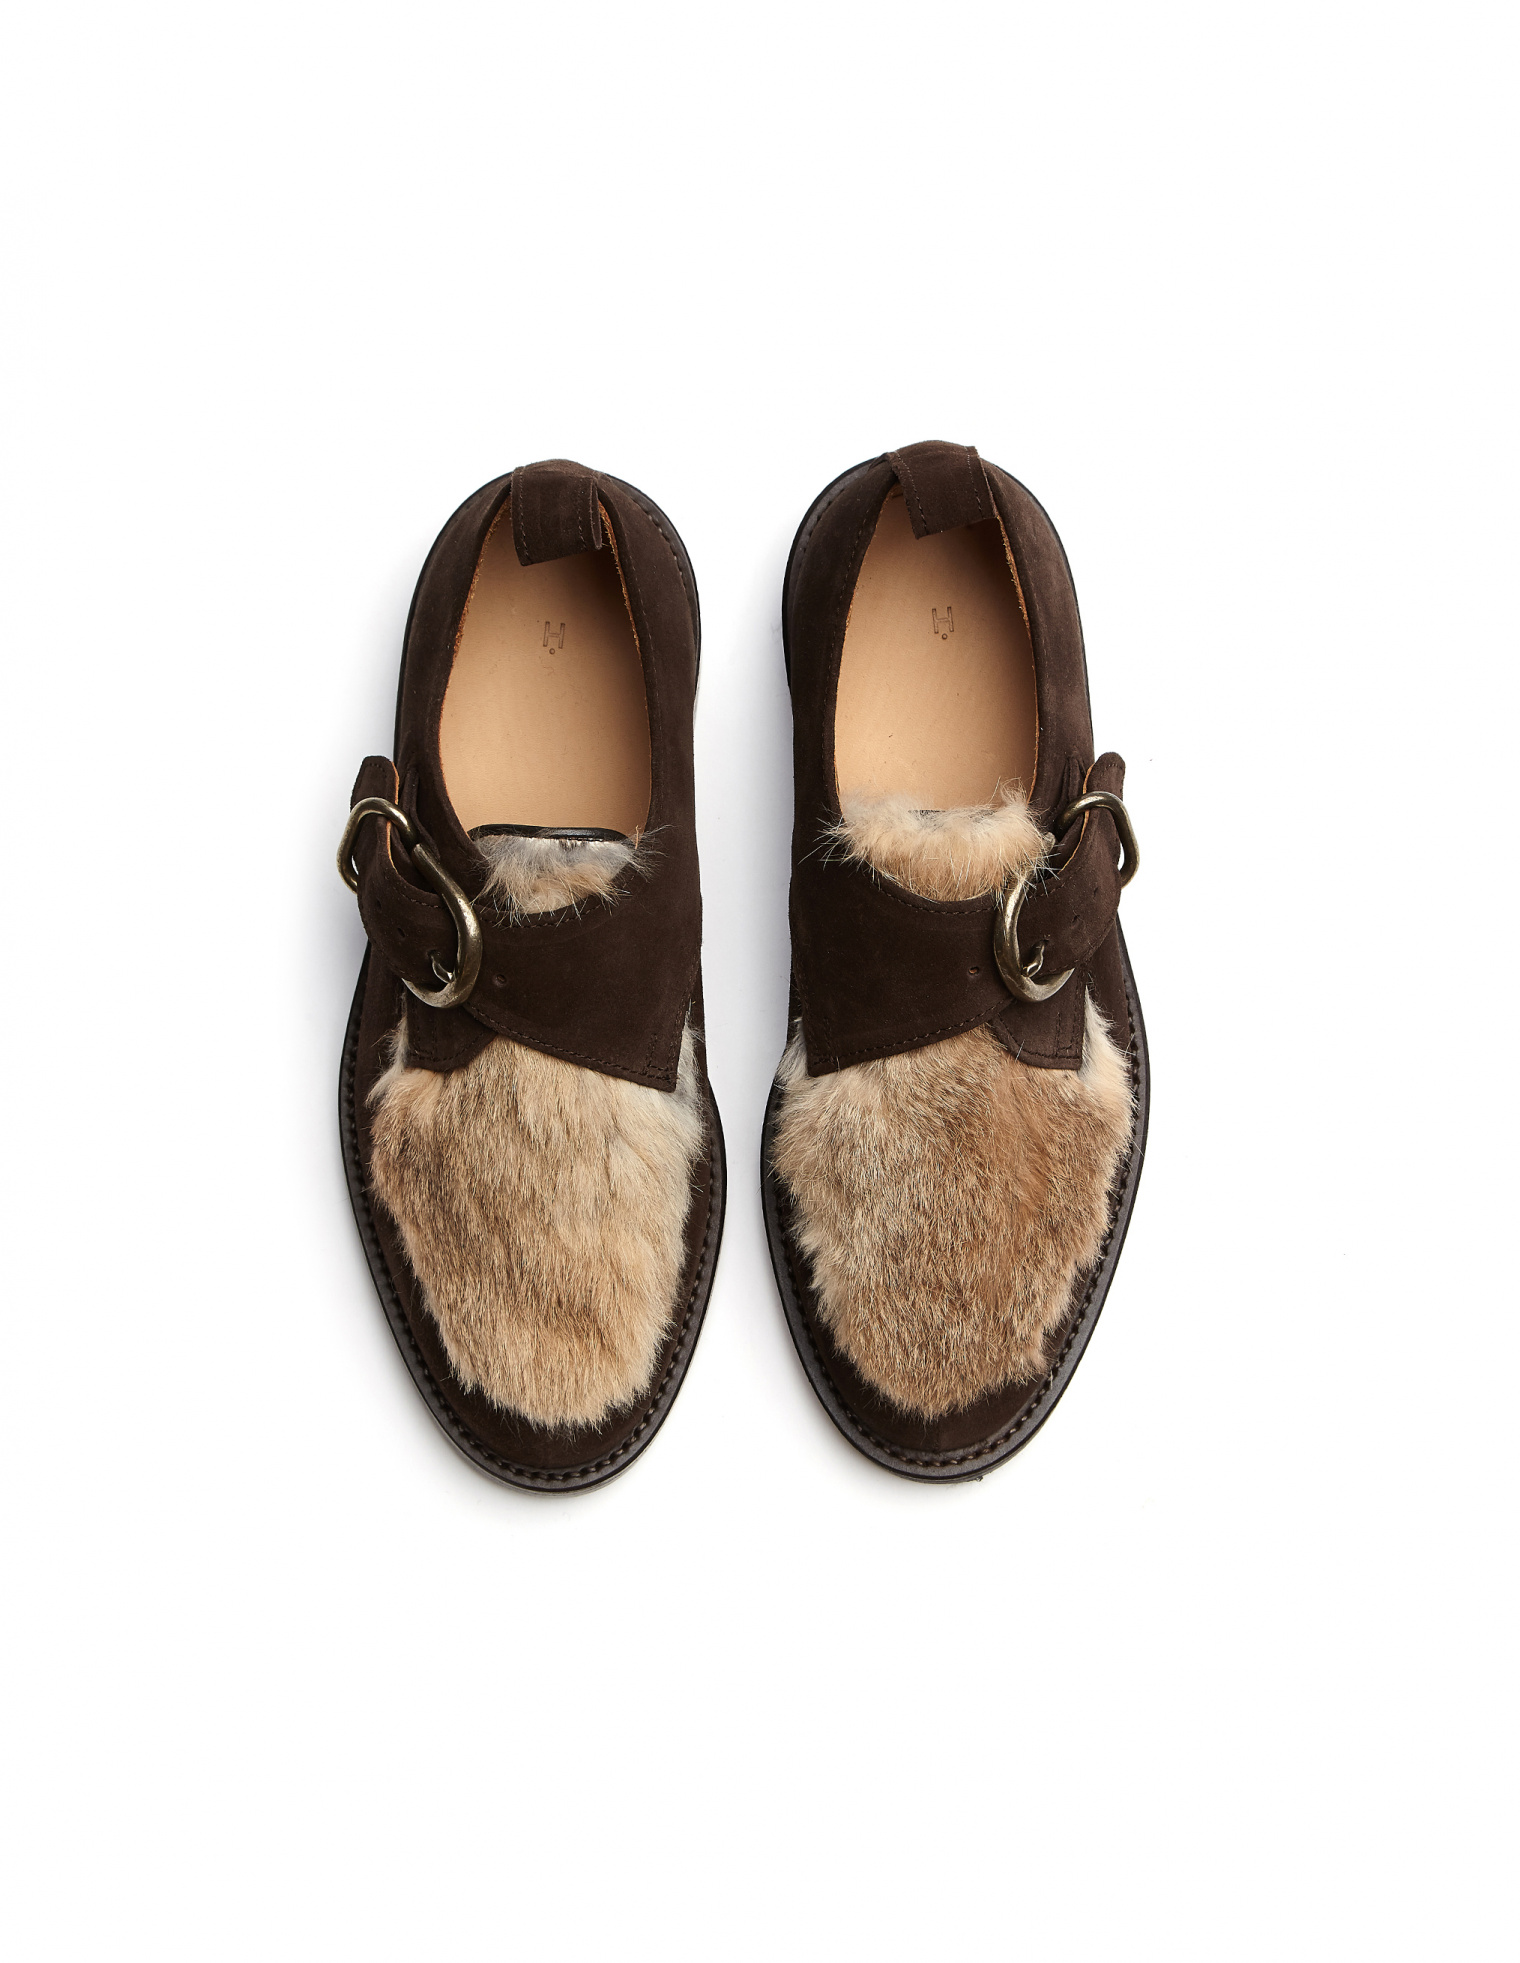 Hender Scheme Monk Shoes with Rabbit Fur Decor